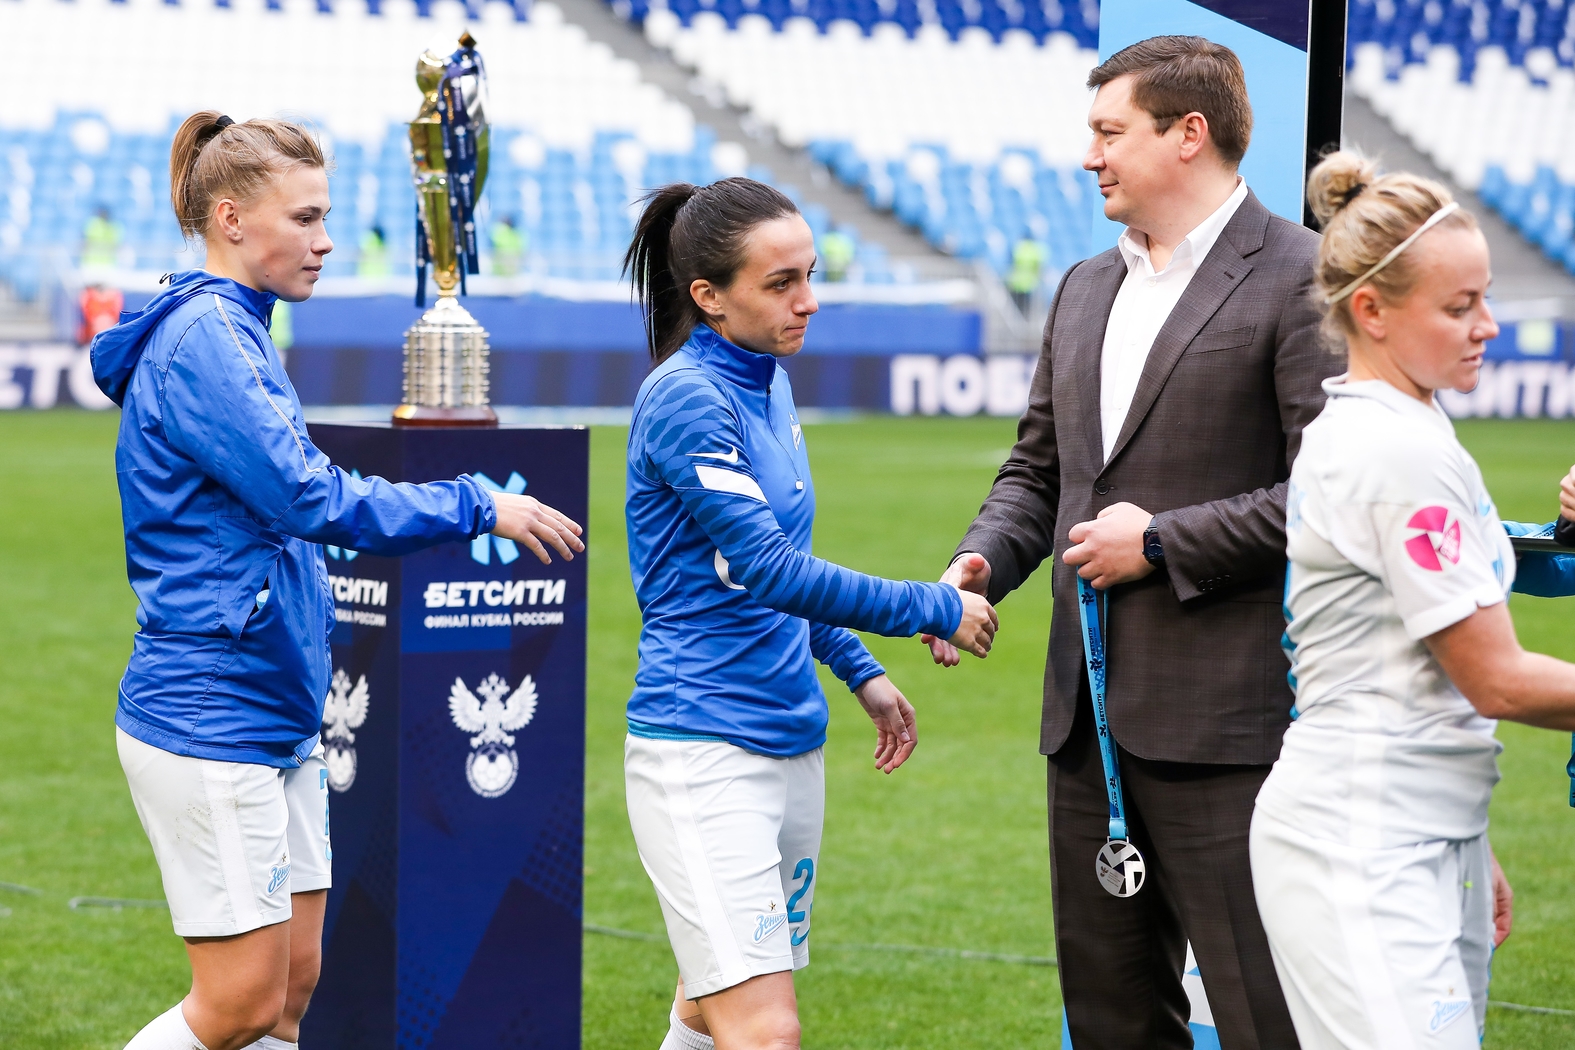 O Zenit é vice-campeão da Copa da Rússia feminina